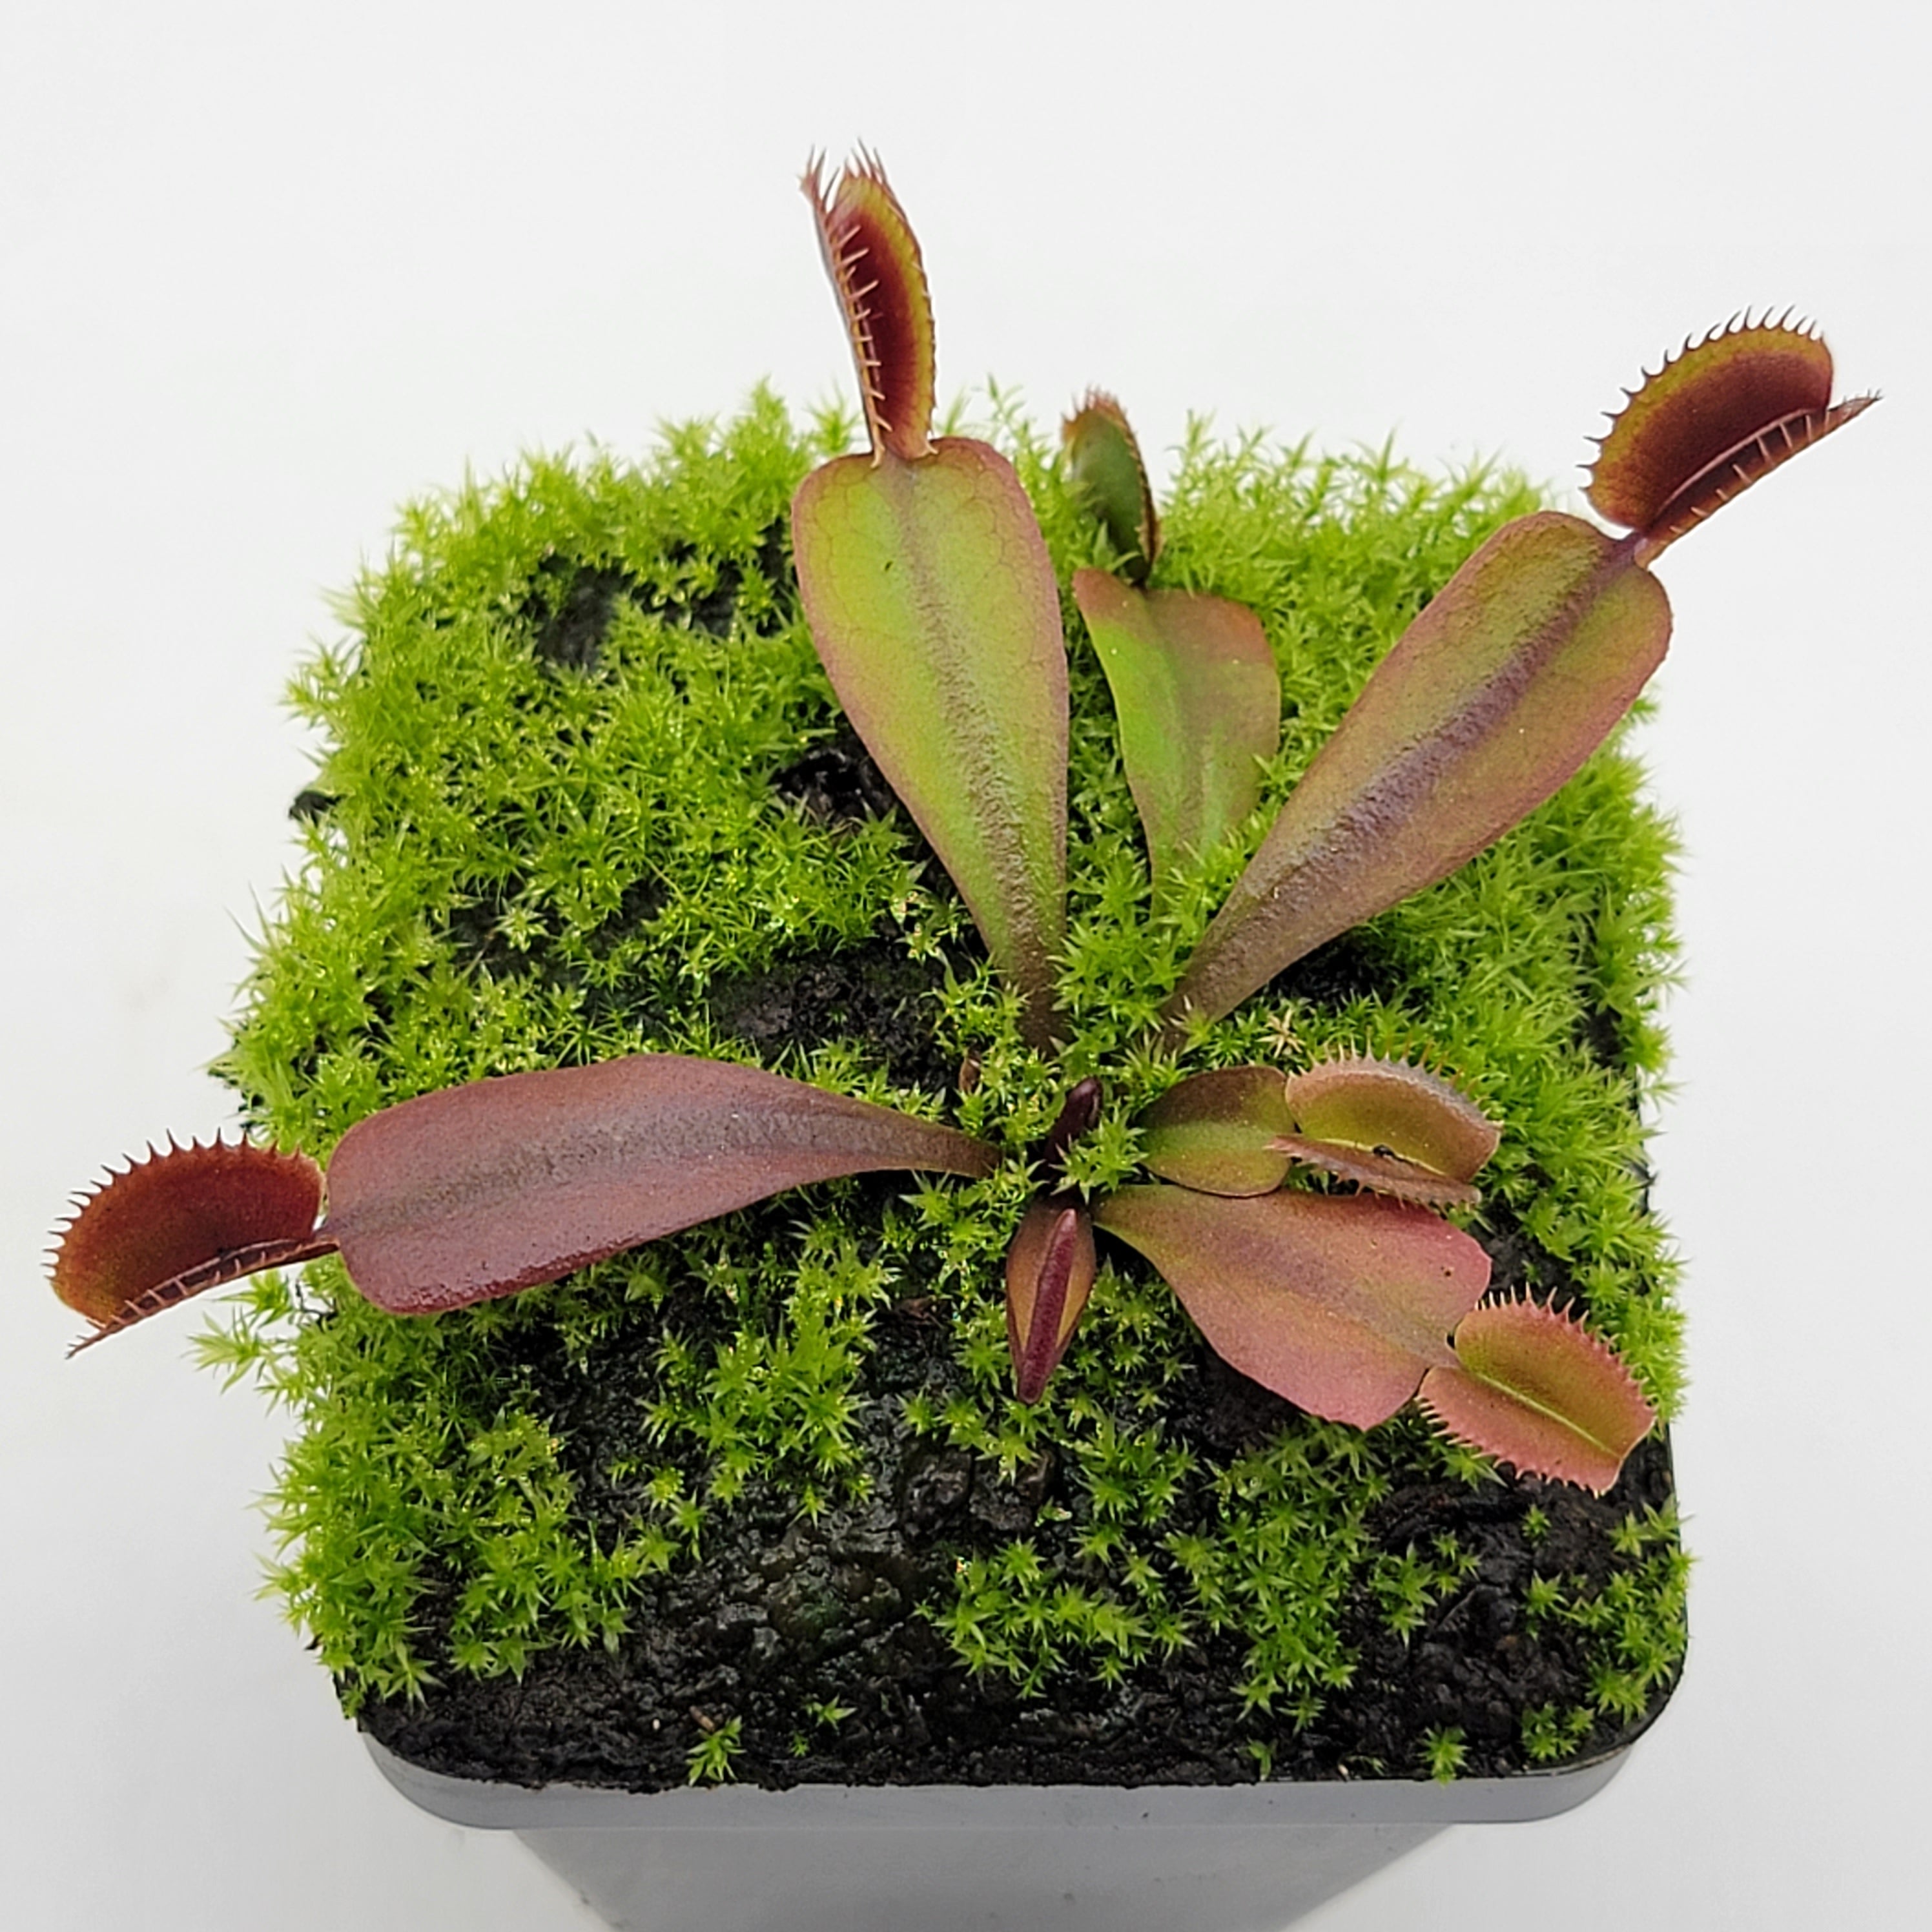 Venus flytrap (Dionaea muscipula) "Red Shark Teeth" - Rainbow Carnivorous Plants LLC